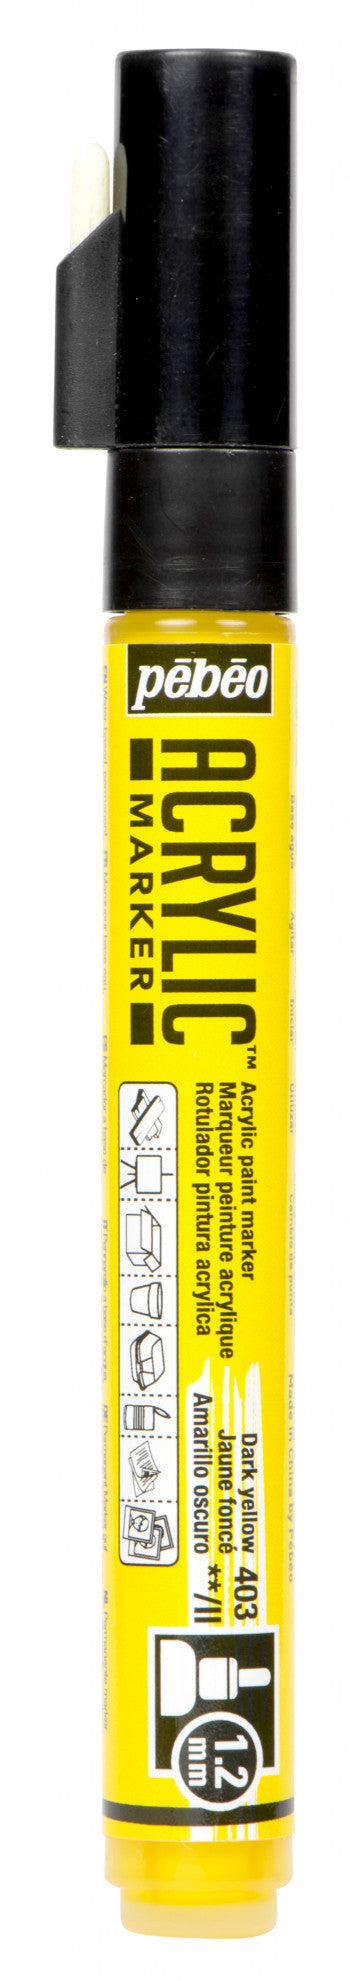 Acrylic Marker 1.2mm Pebeo       Jaune foncé - 403